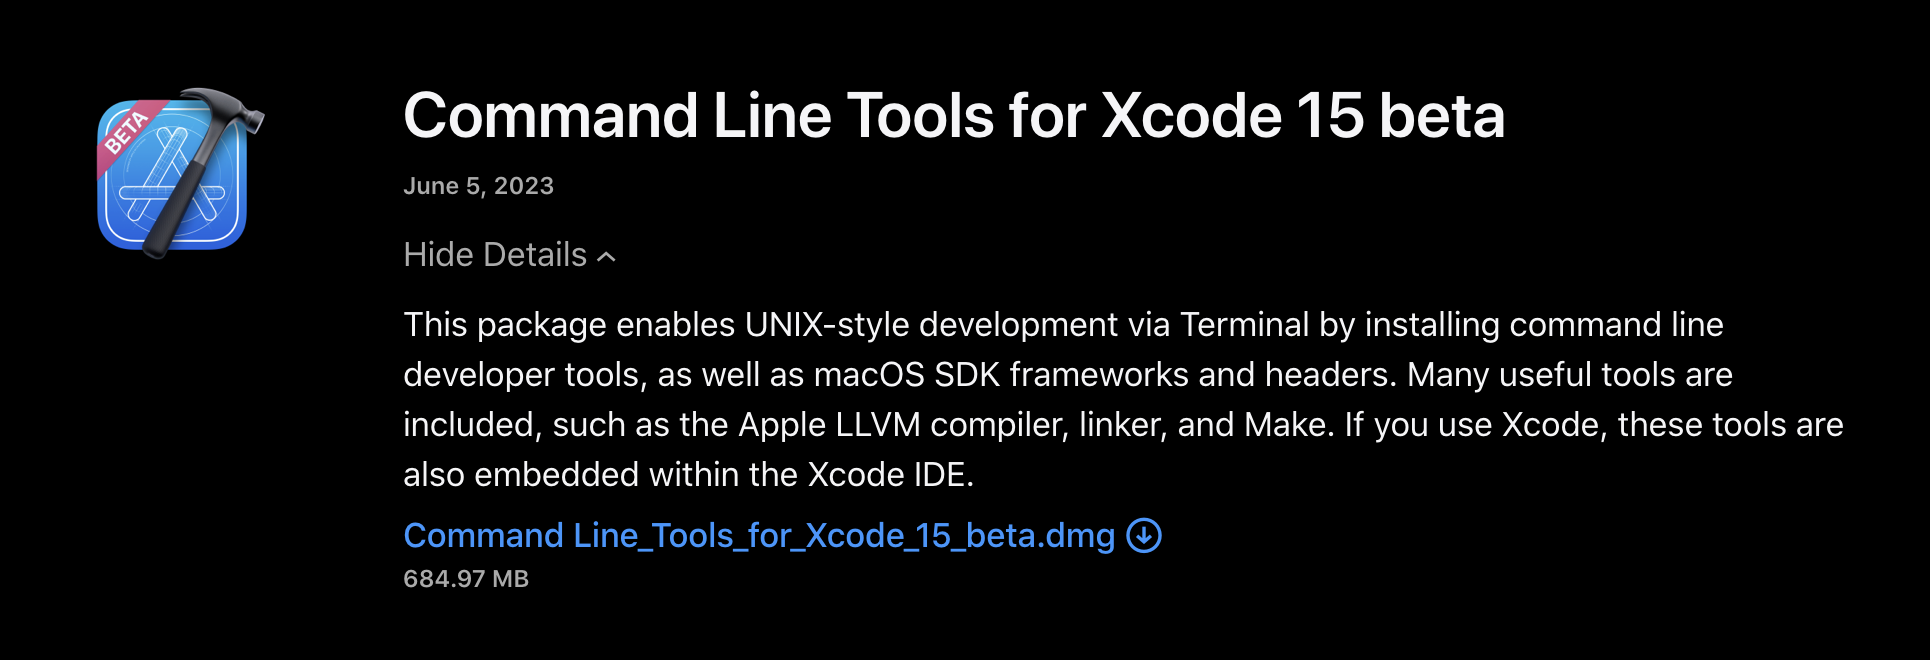 Command Line Tools for Xcode 15 beta 다운로드